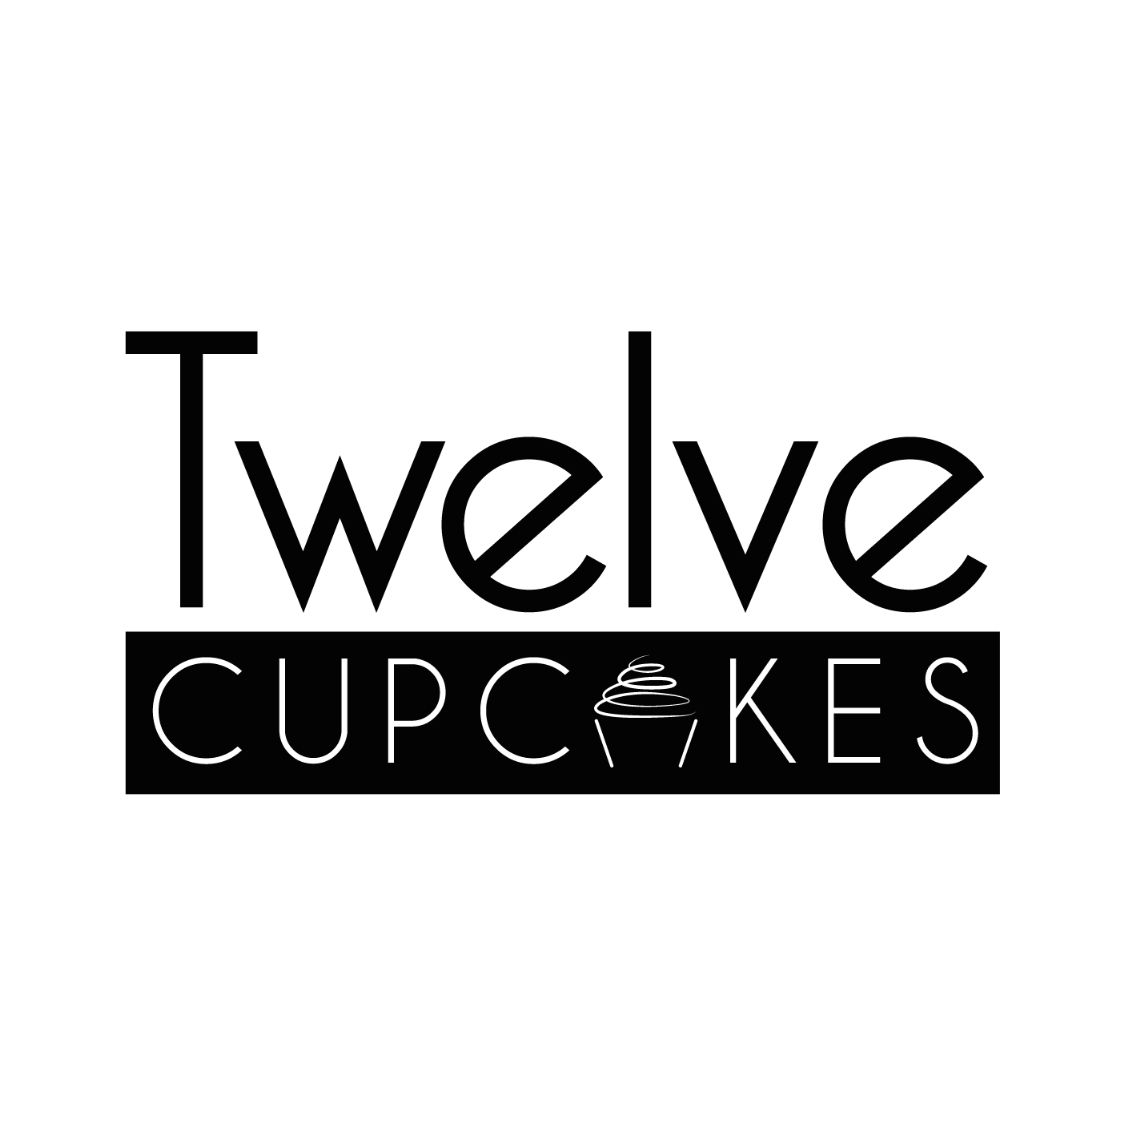 Twelve Cupcakes Logo.jpg